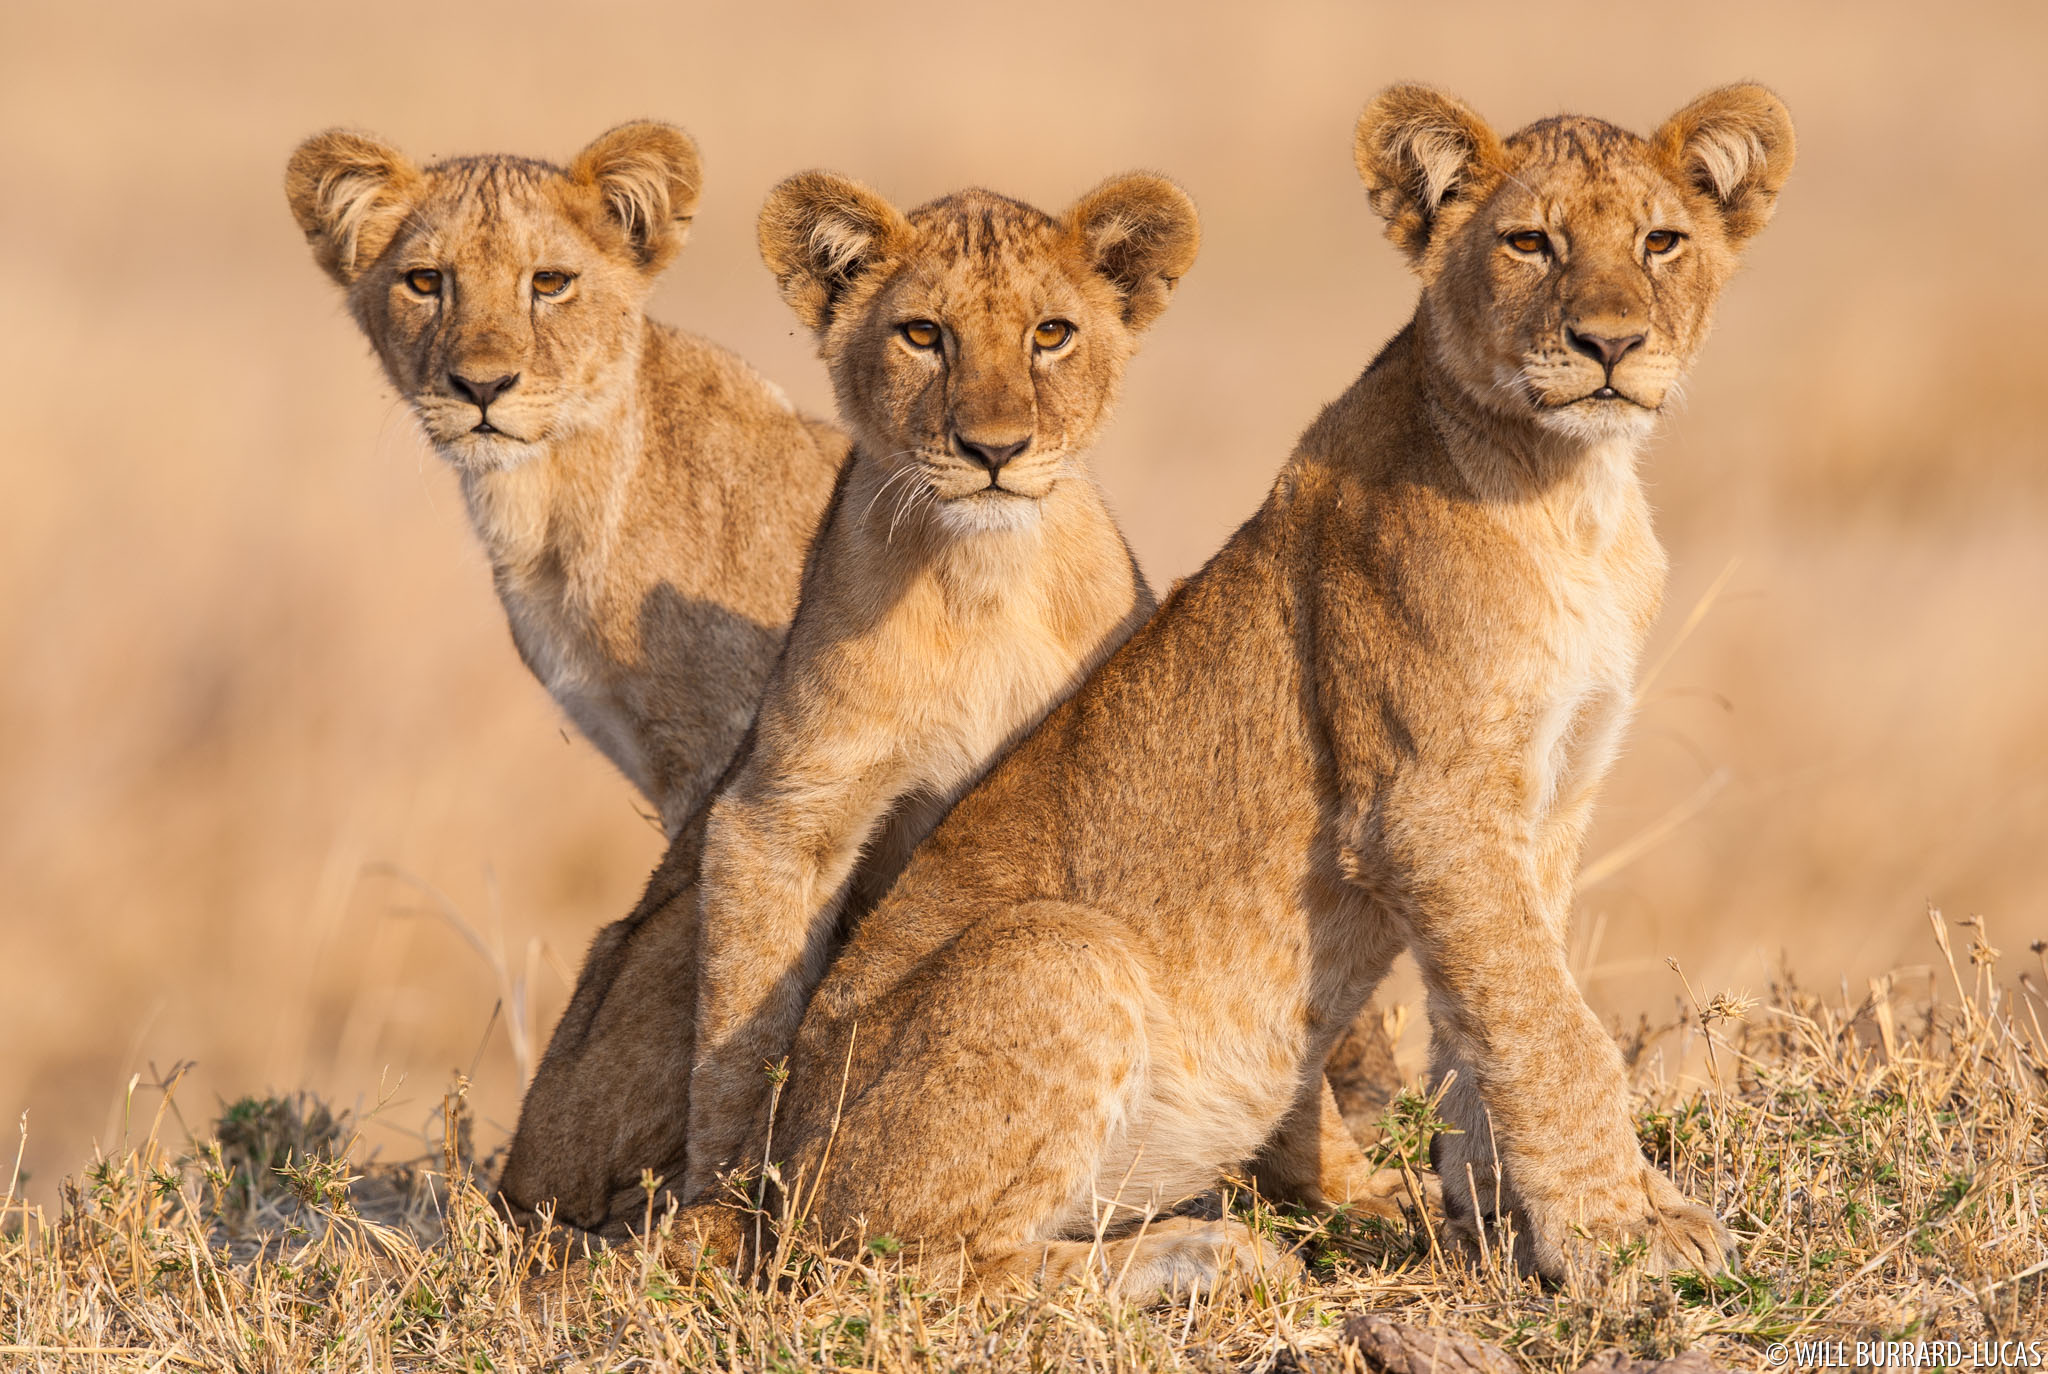 Three Lion Cubs, Colour Limited Edition Print - Will Burrard-Lucas